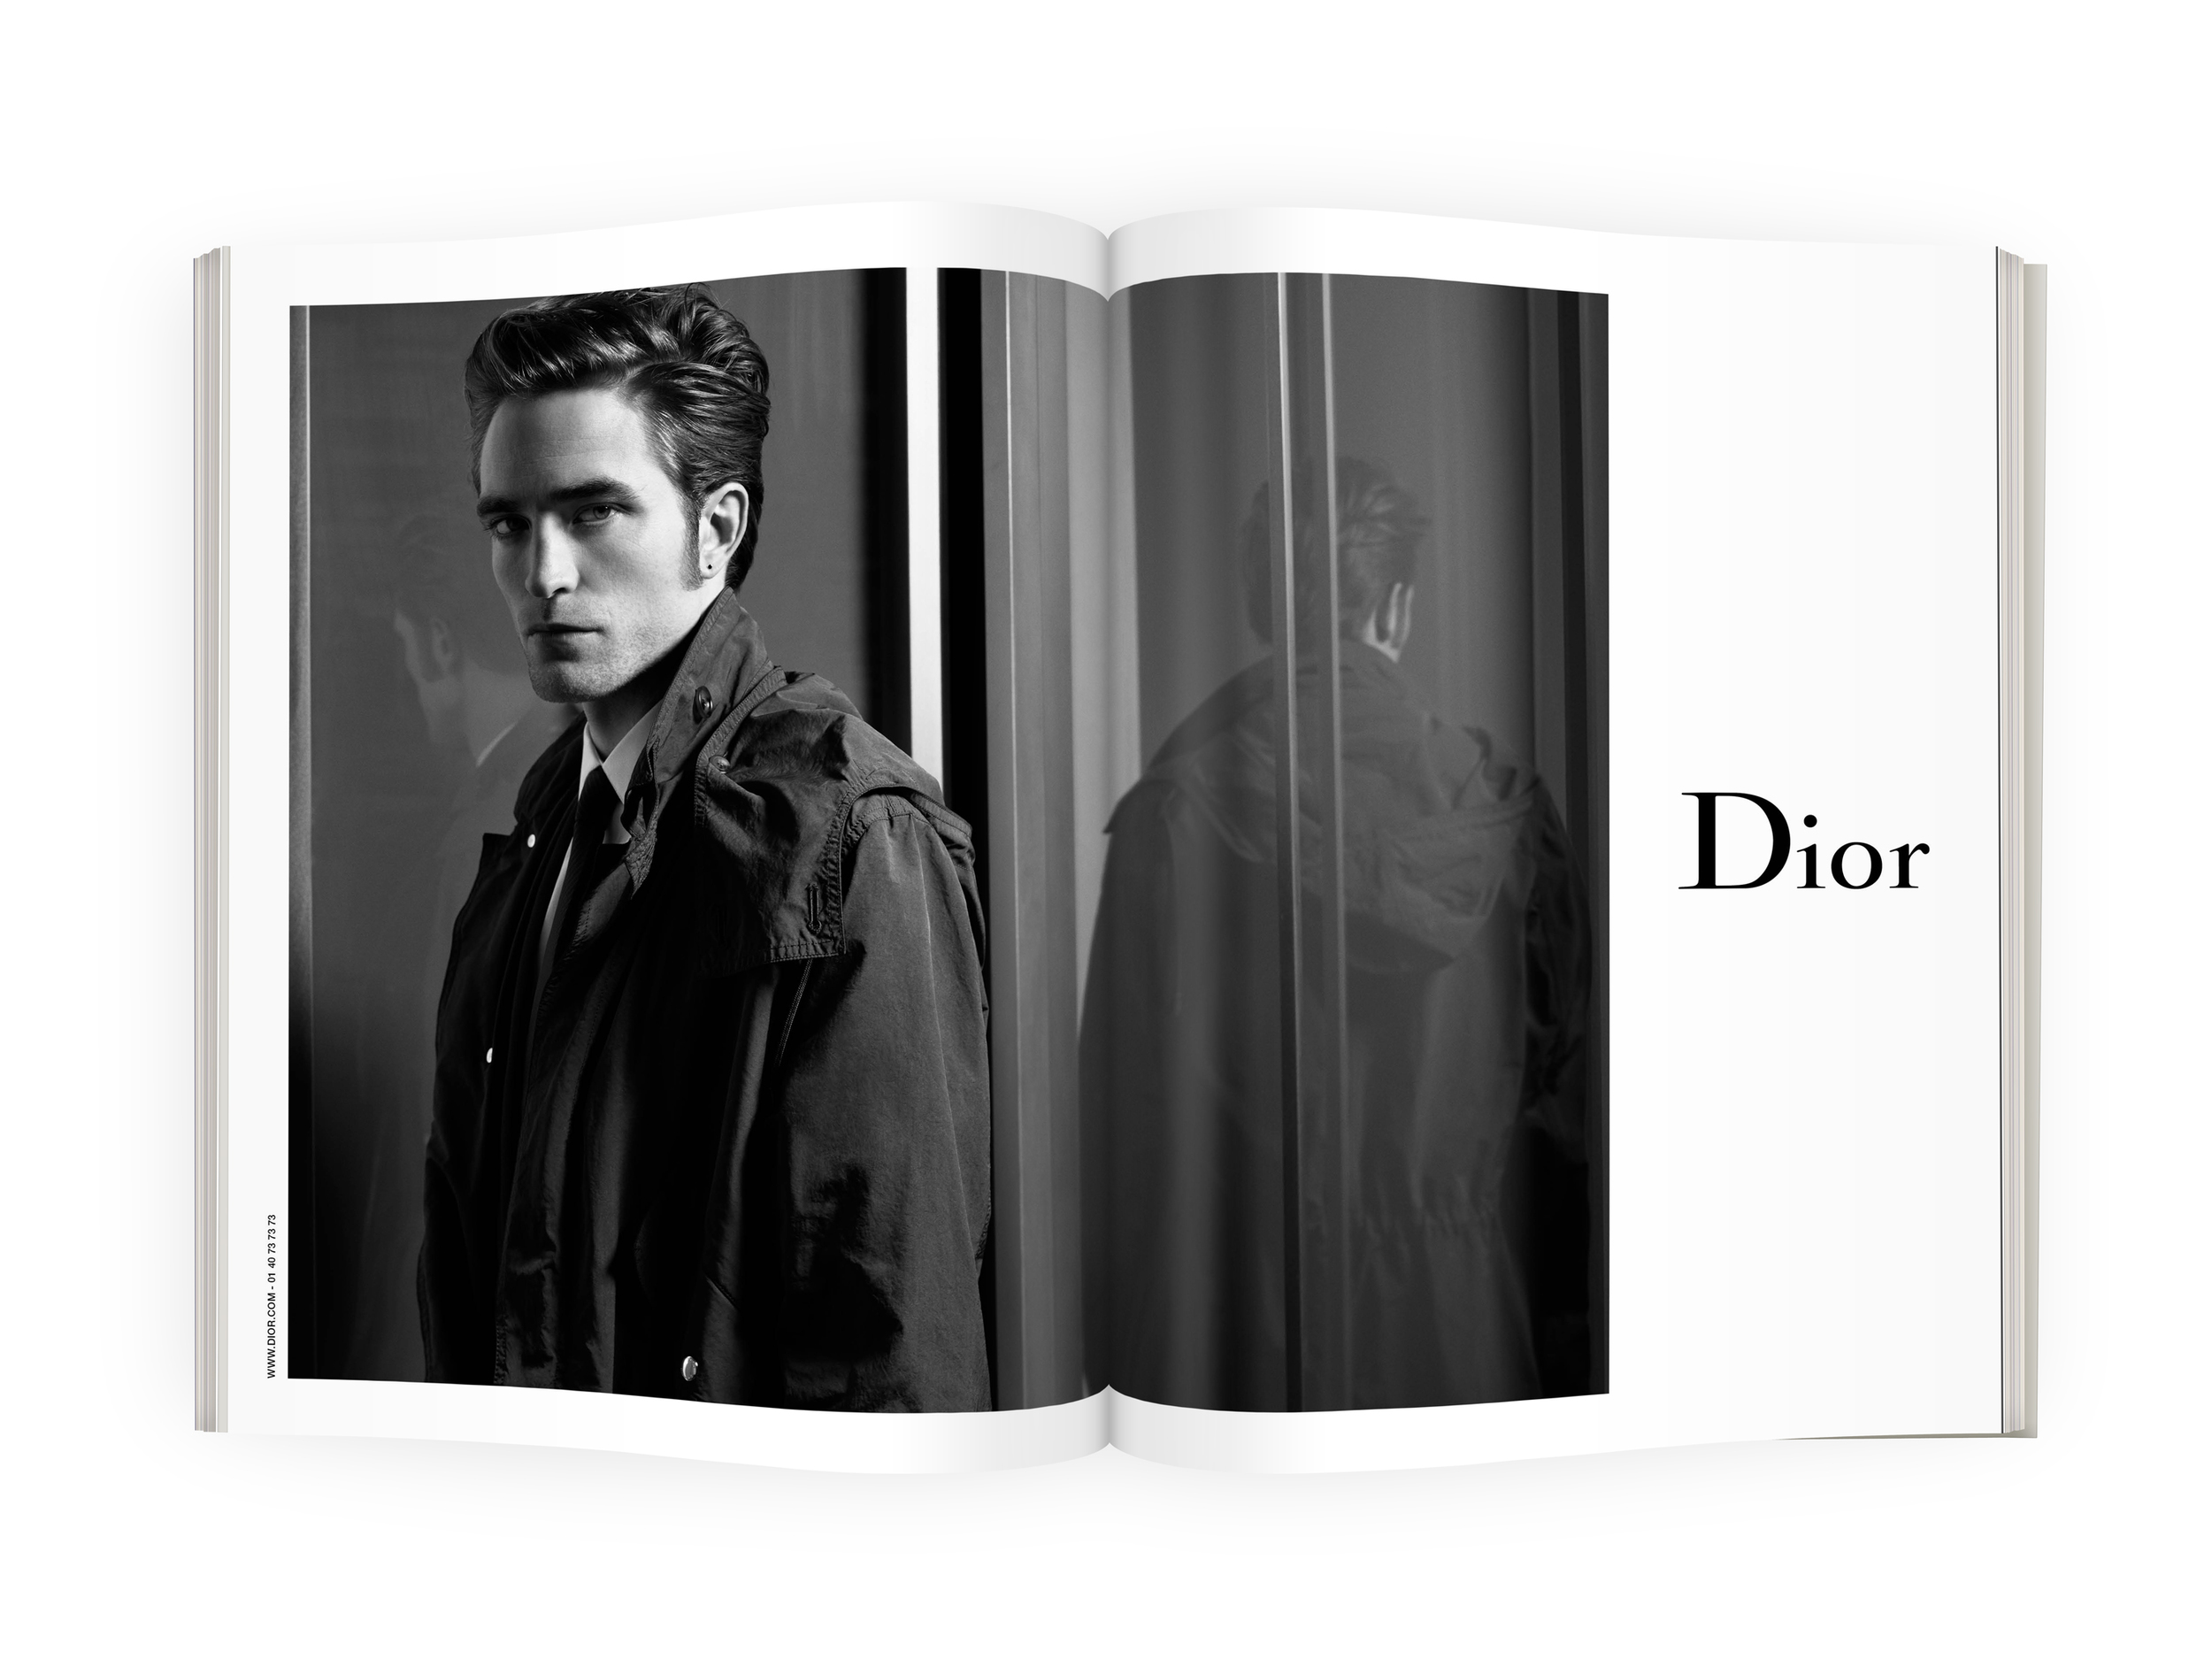 Graphic Design Studio Baers stunning book celebrating Dior and the  Impressionists